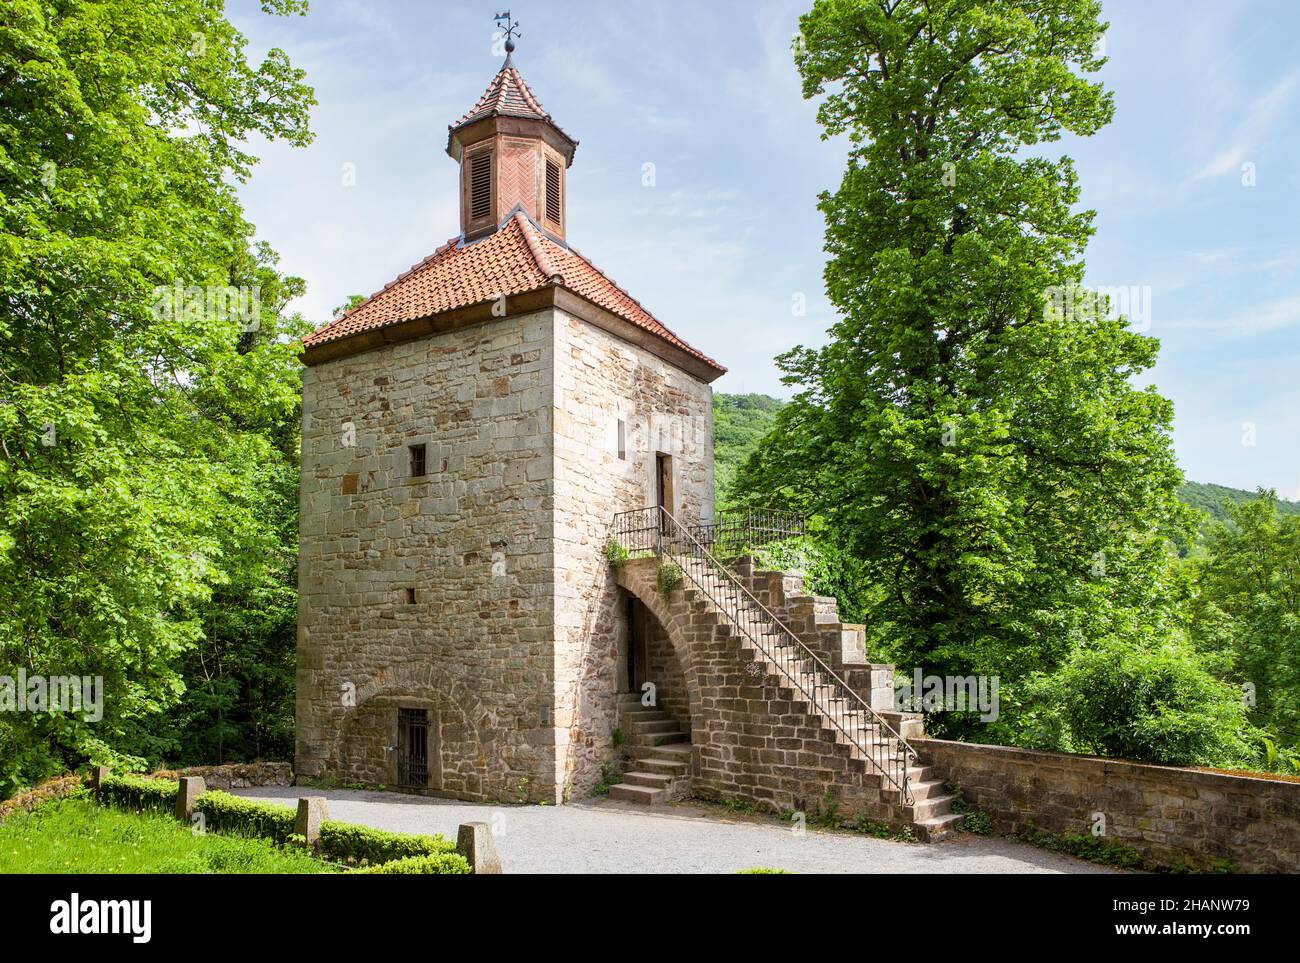 Belltower, Schaumburg Castle, Rinteln, district of Schaumburg, Lower Saxony, Germany, Europe Stock Photo